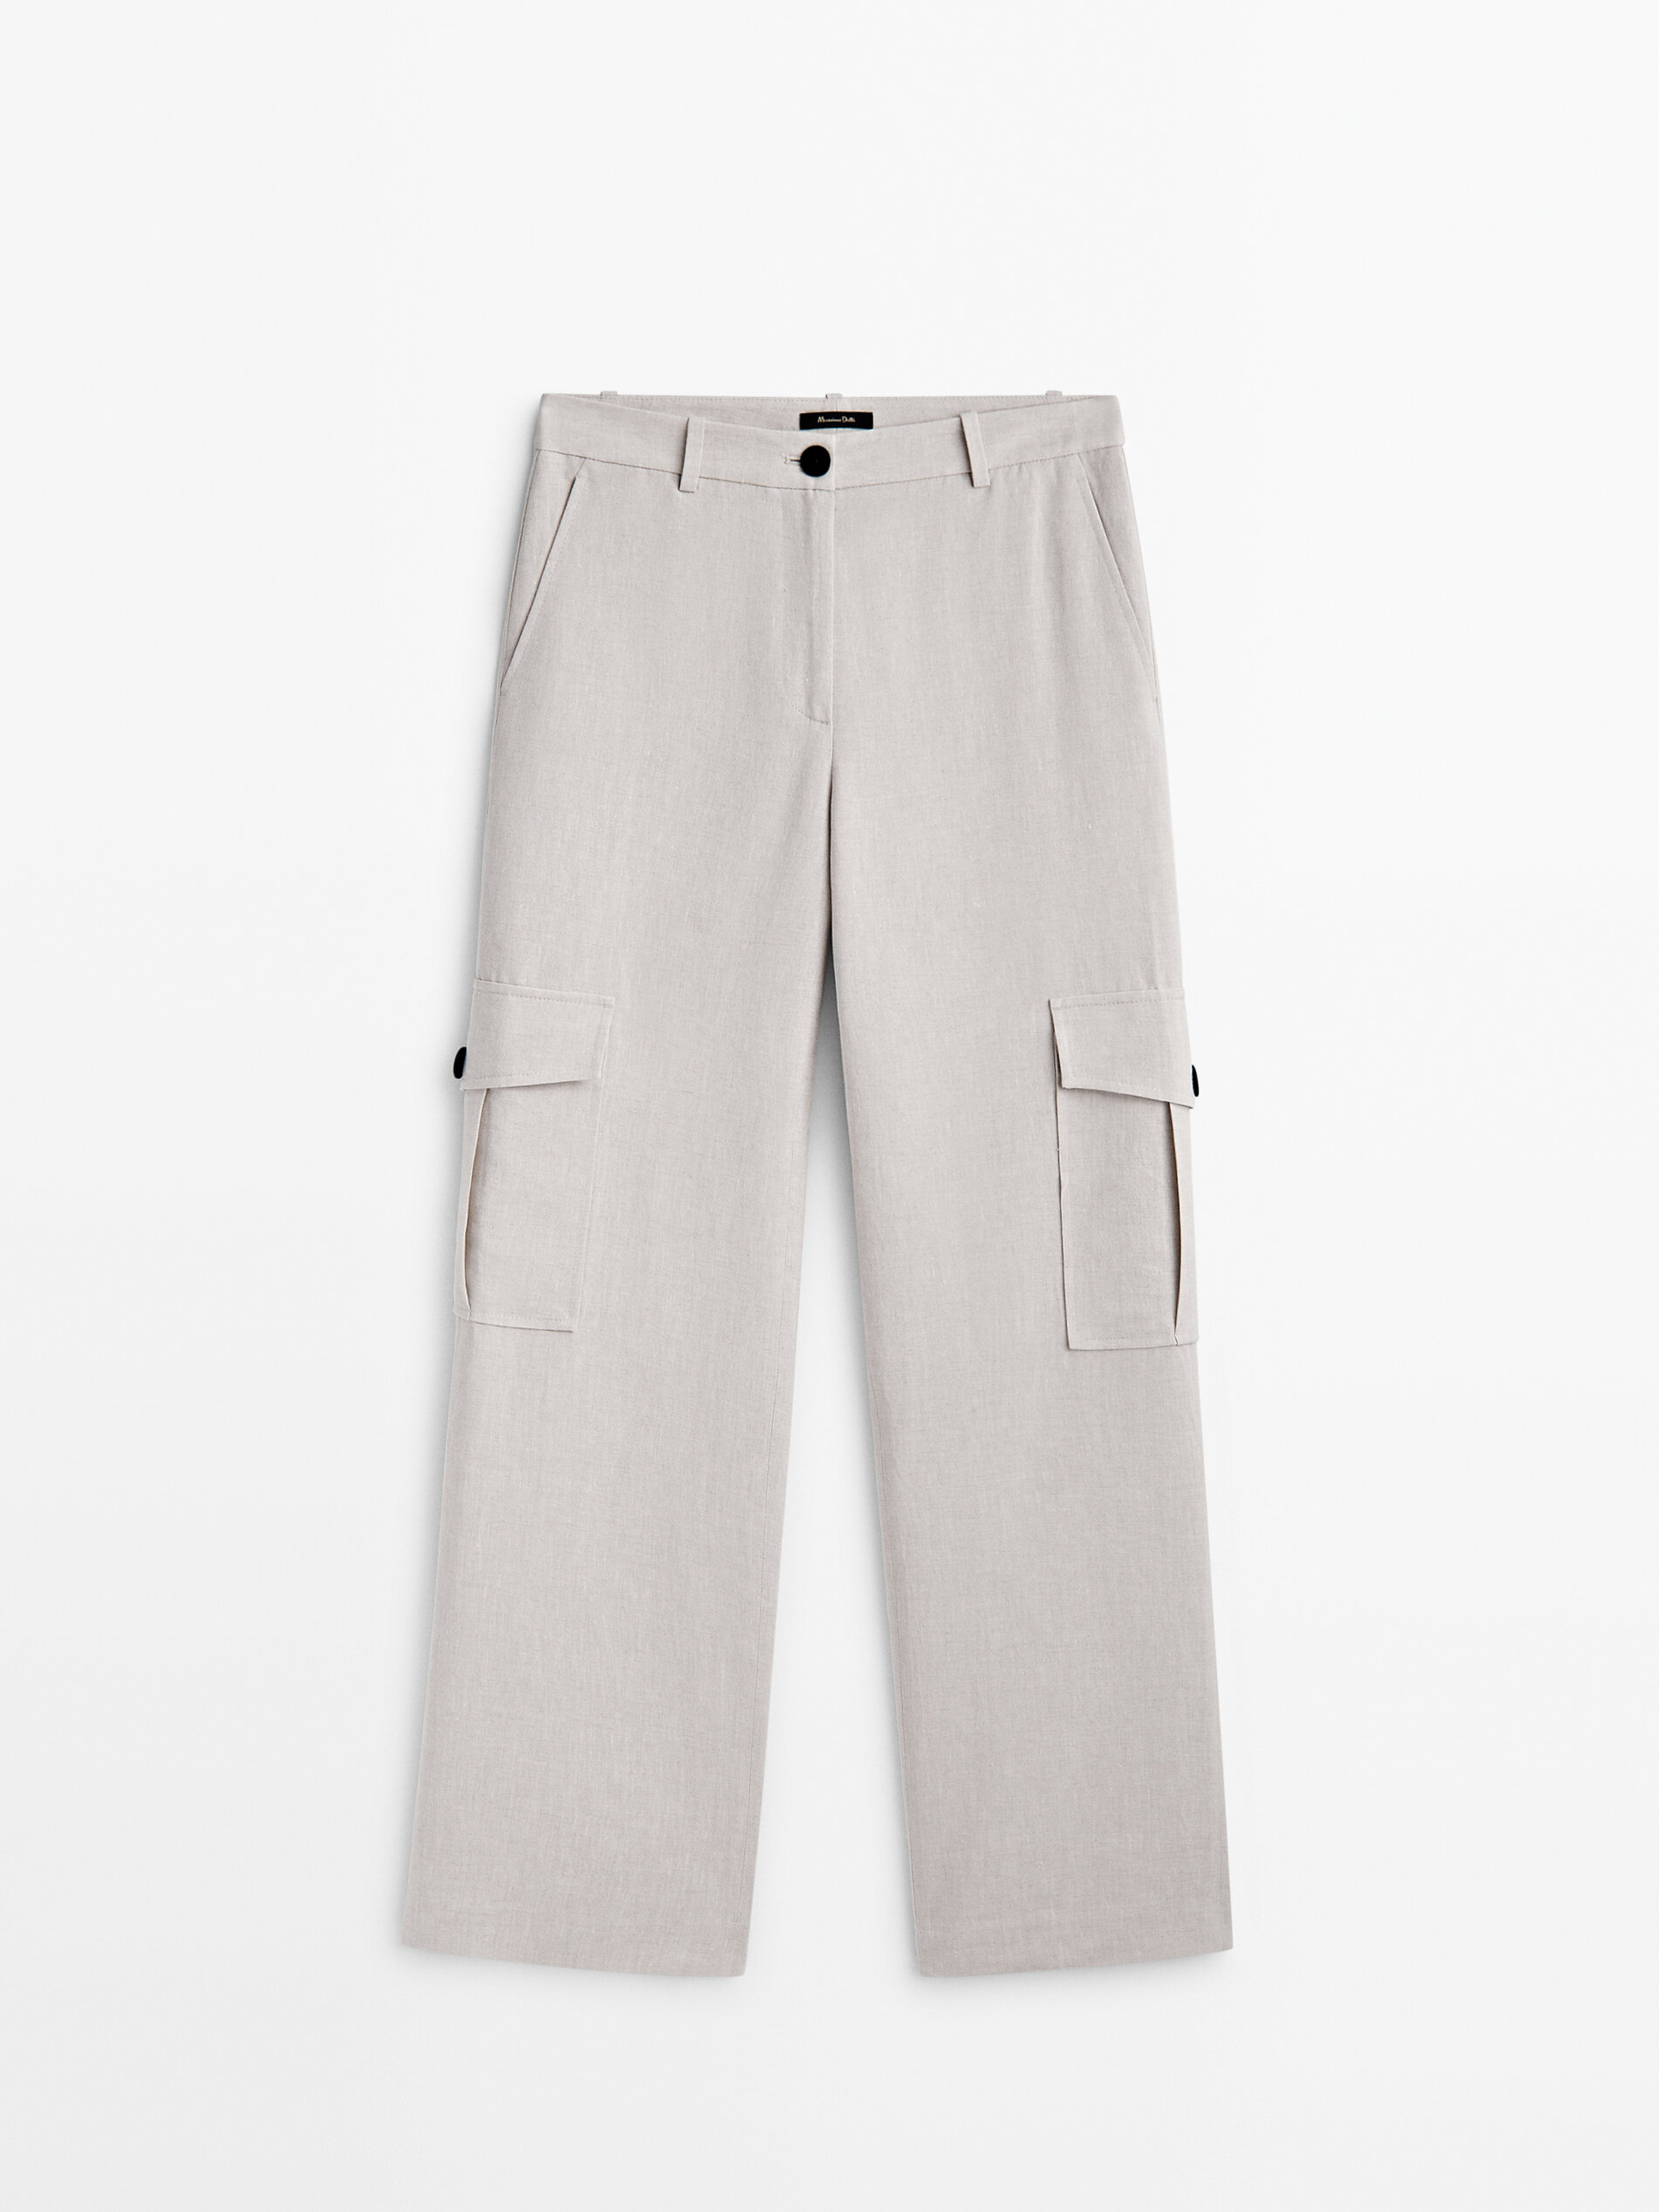 Buy Grey Trousers  Pants for Men by iVOC Online  Ajiocom